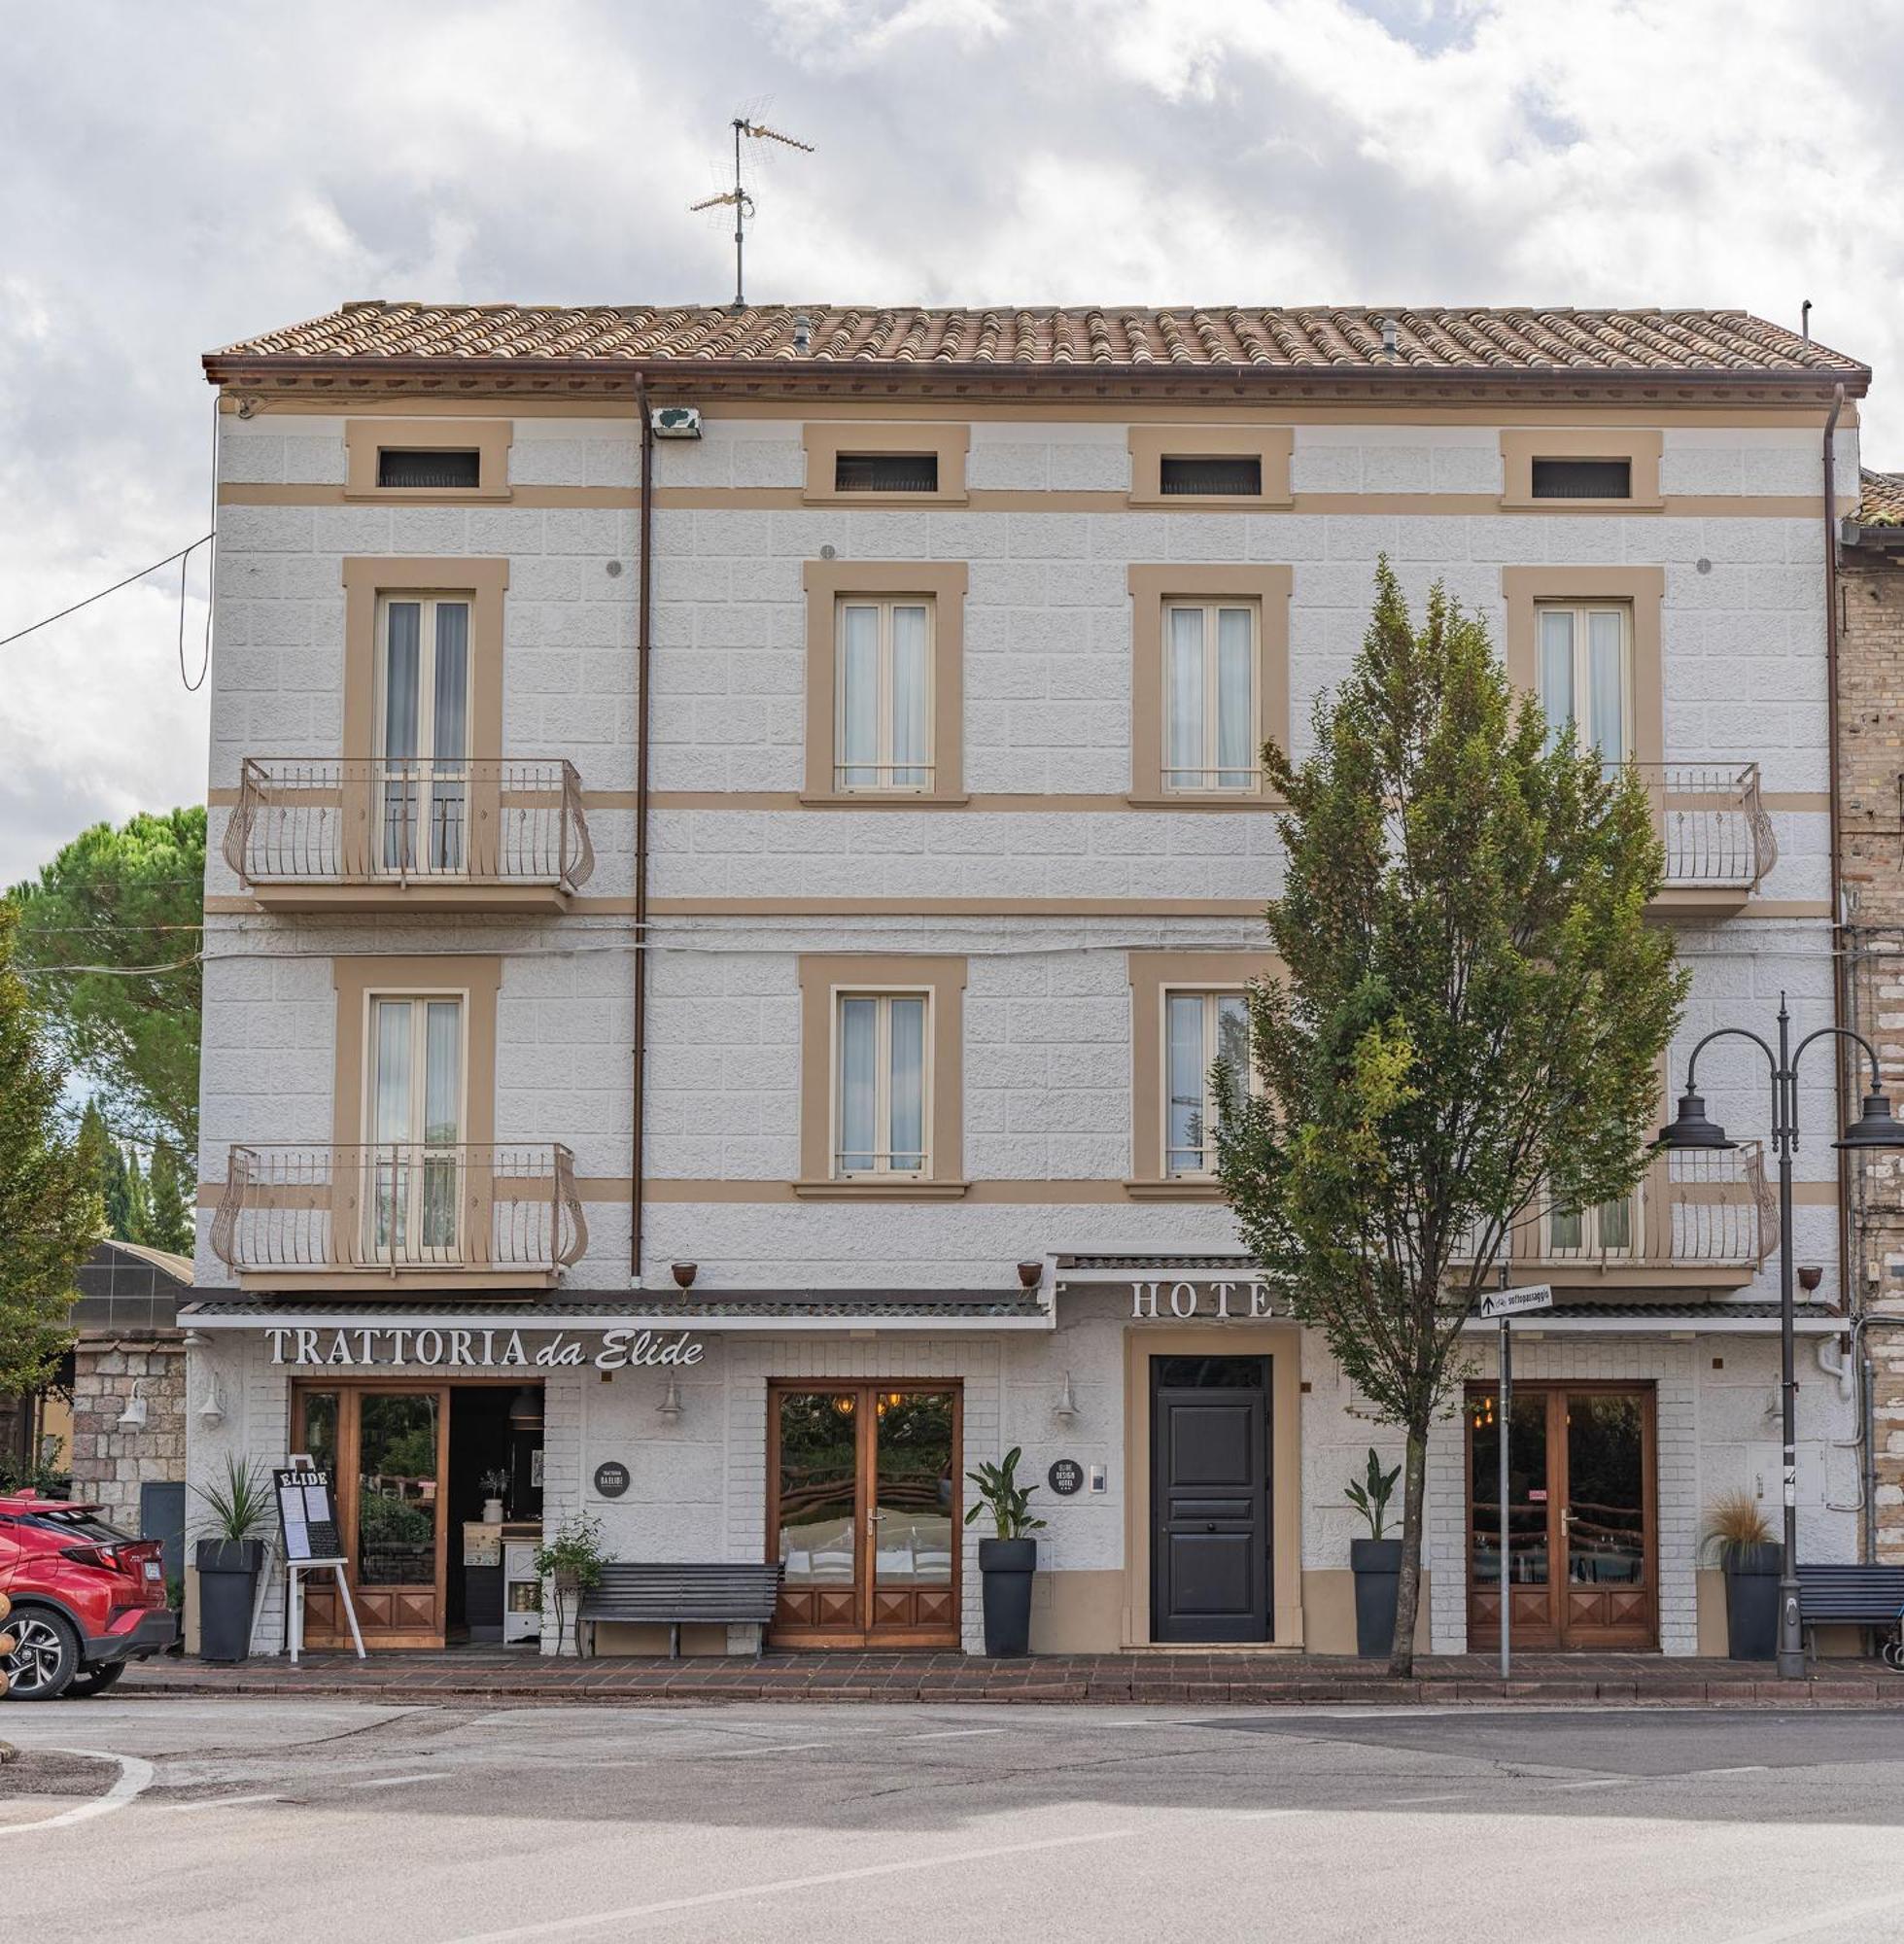 Elide Design Hotel Assisi Exterior photo